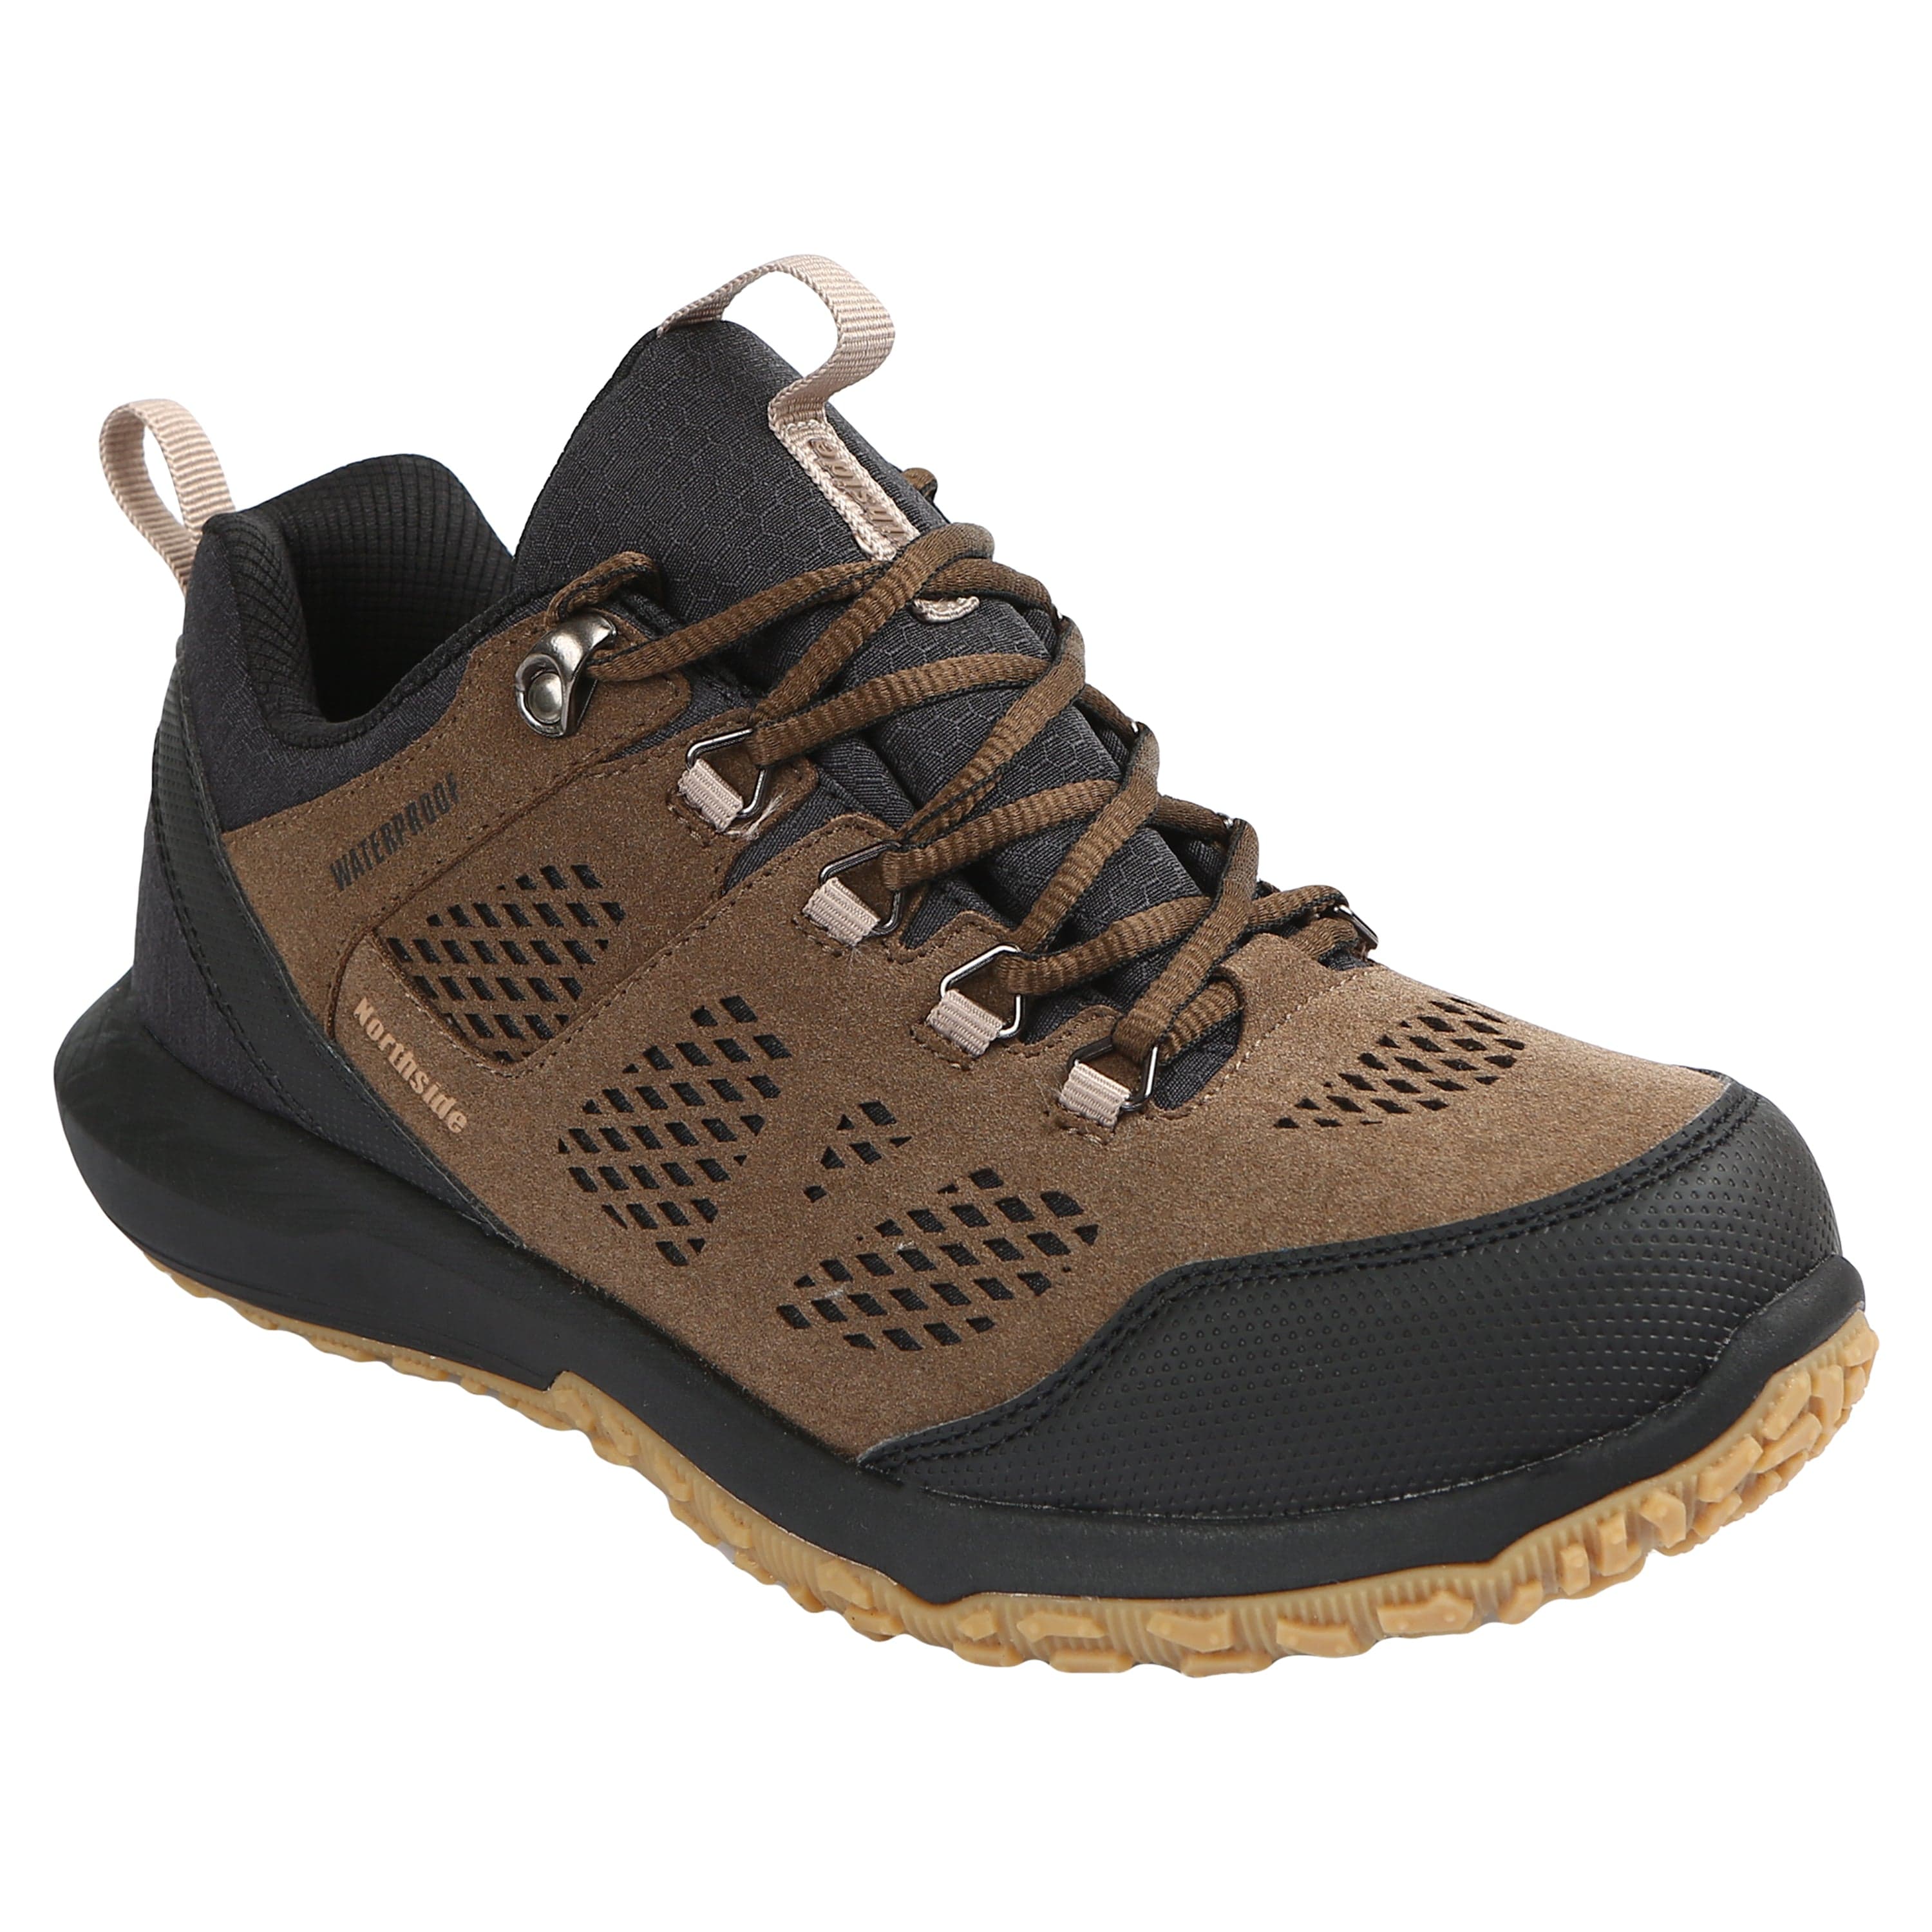 Men's Benton Waterproof Hiking Shoe - Northside USA